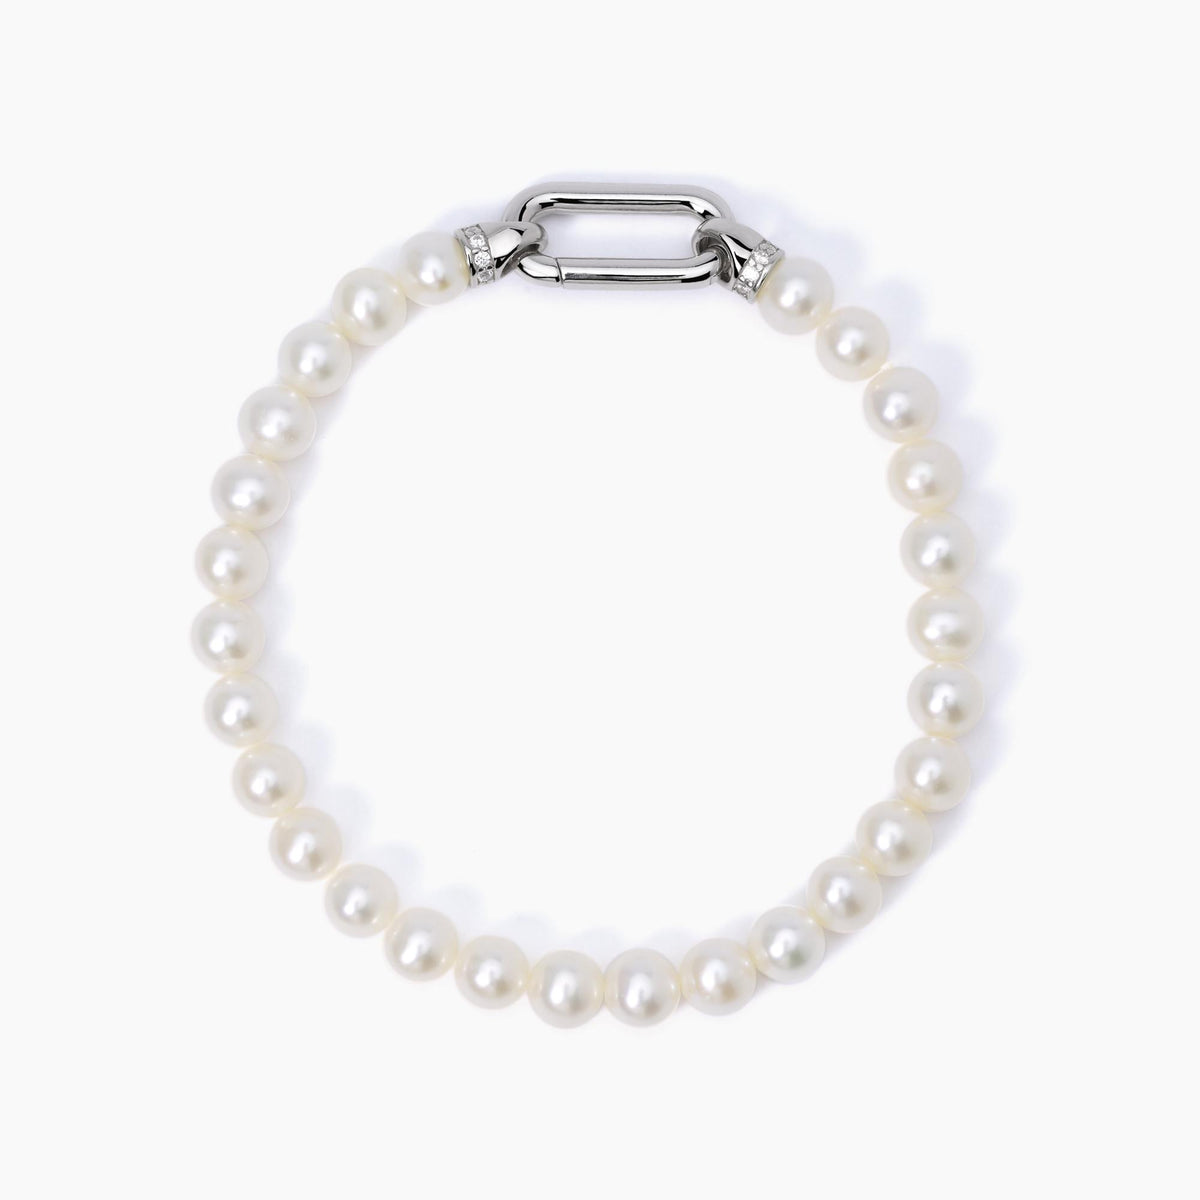 Bracelet Bracelet with cultured pearls Mabina Gioielli 533644-S 